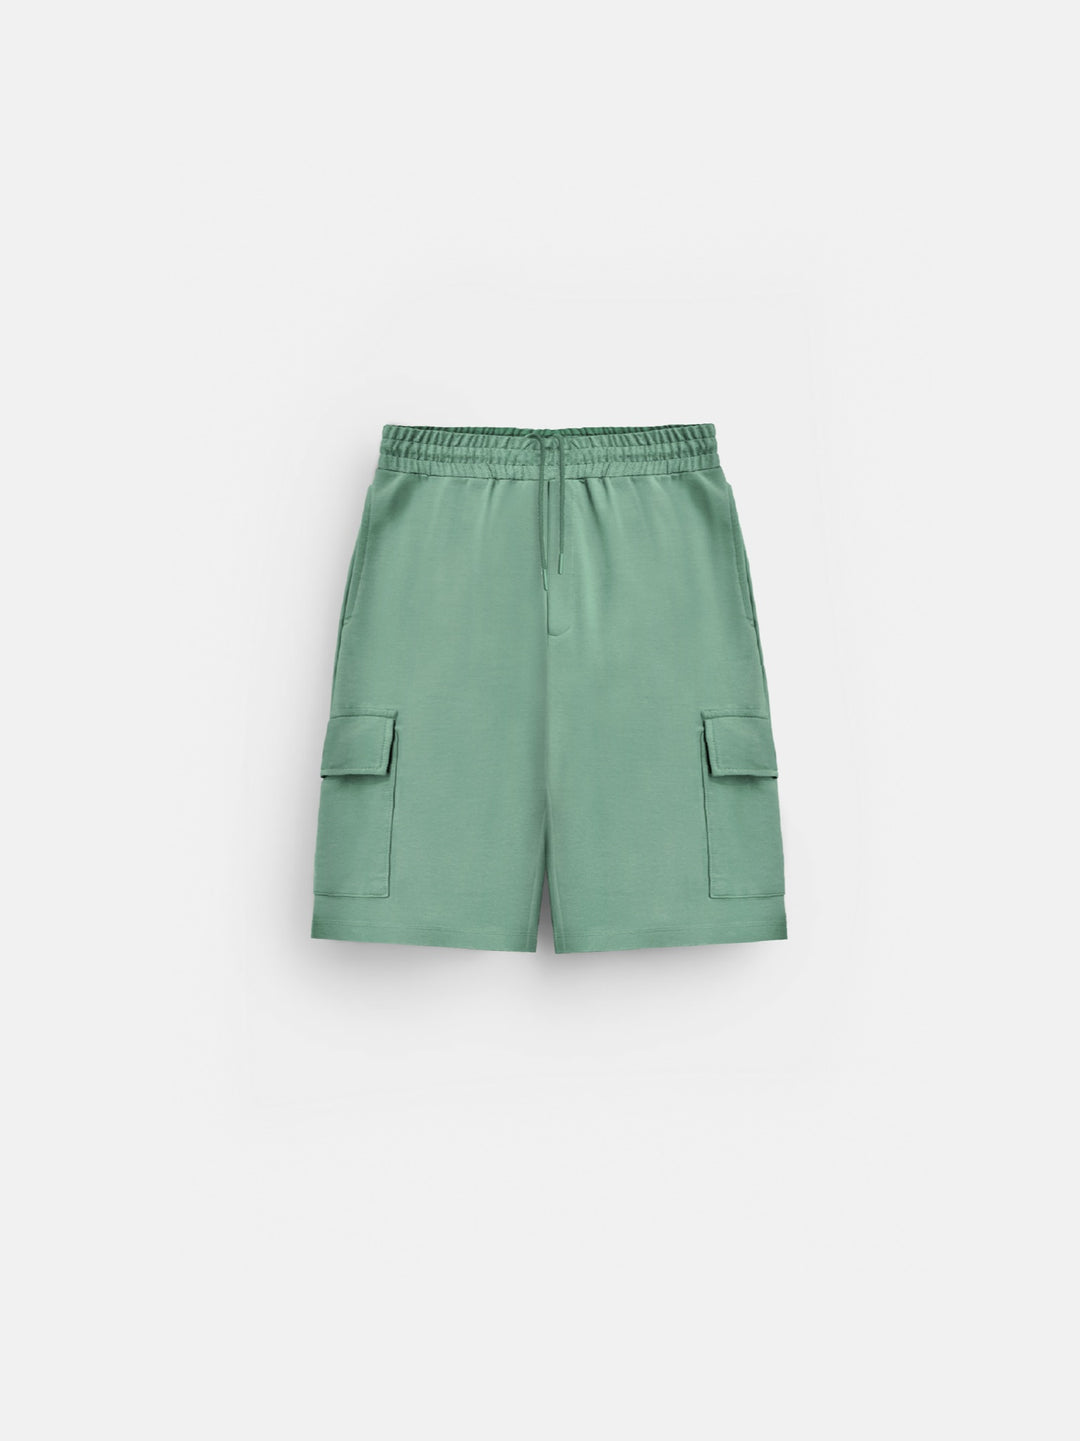 Loose Fit Pocket Shorts - Mint